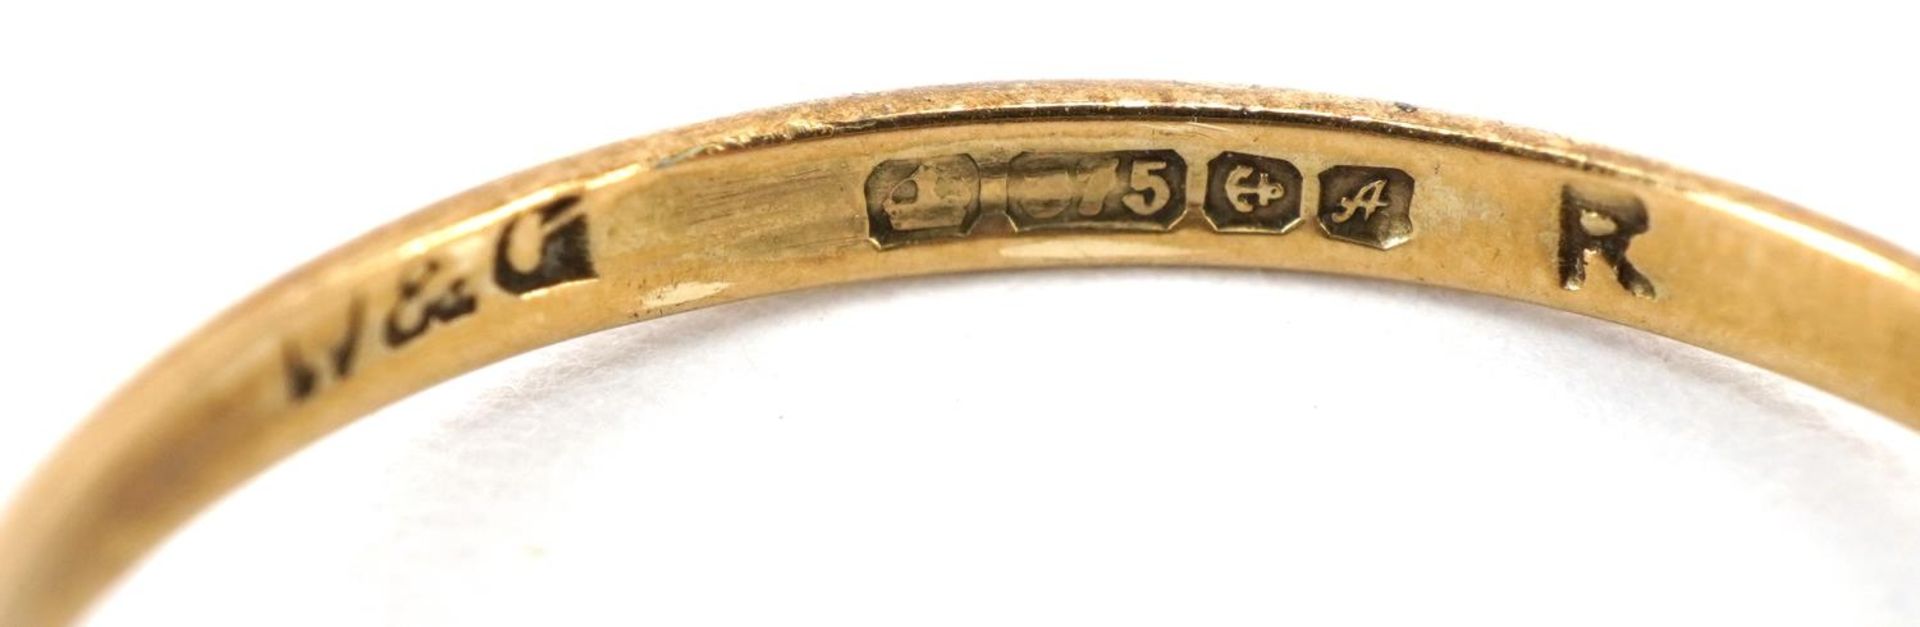 9ct gold garnet and diamond flower head ring, Birmingham 1975, size L, 1.3g - Image 3 of 3